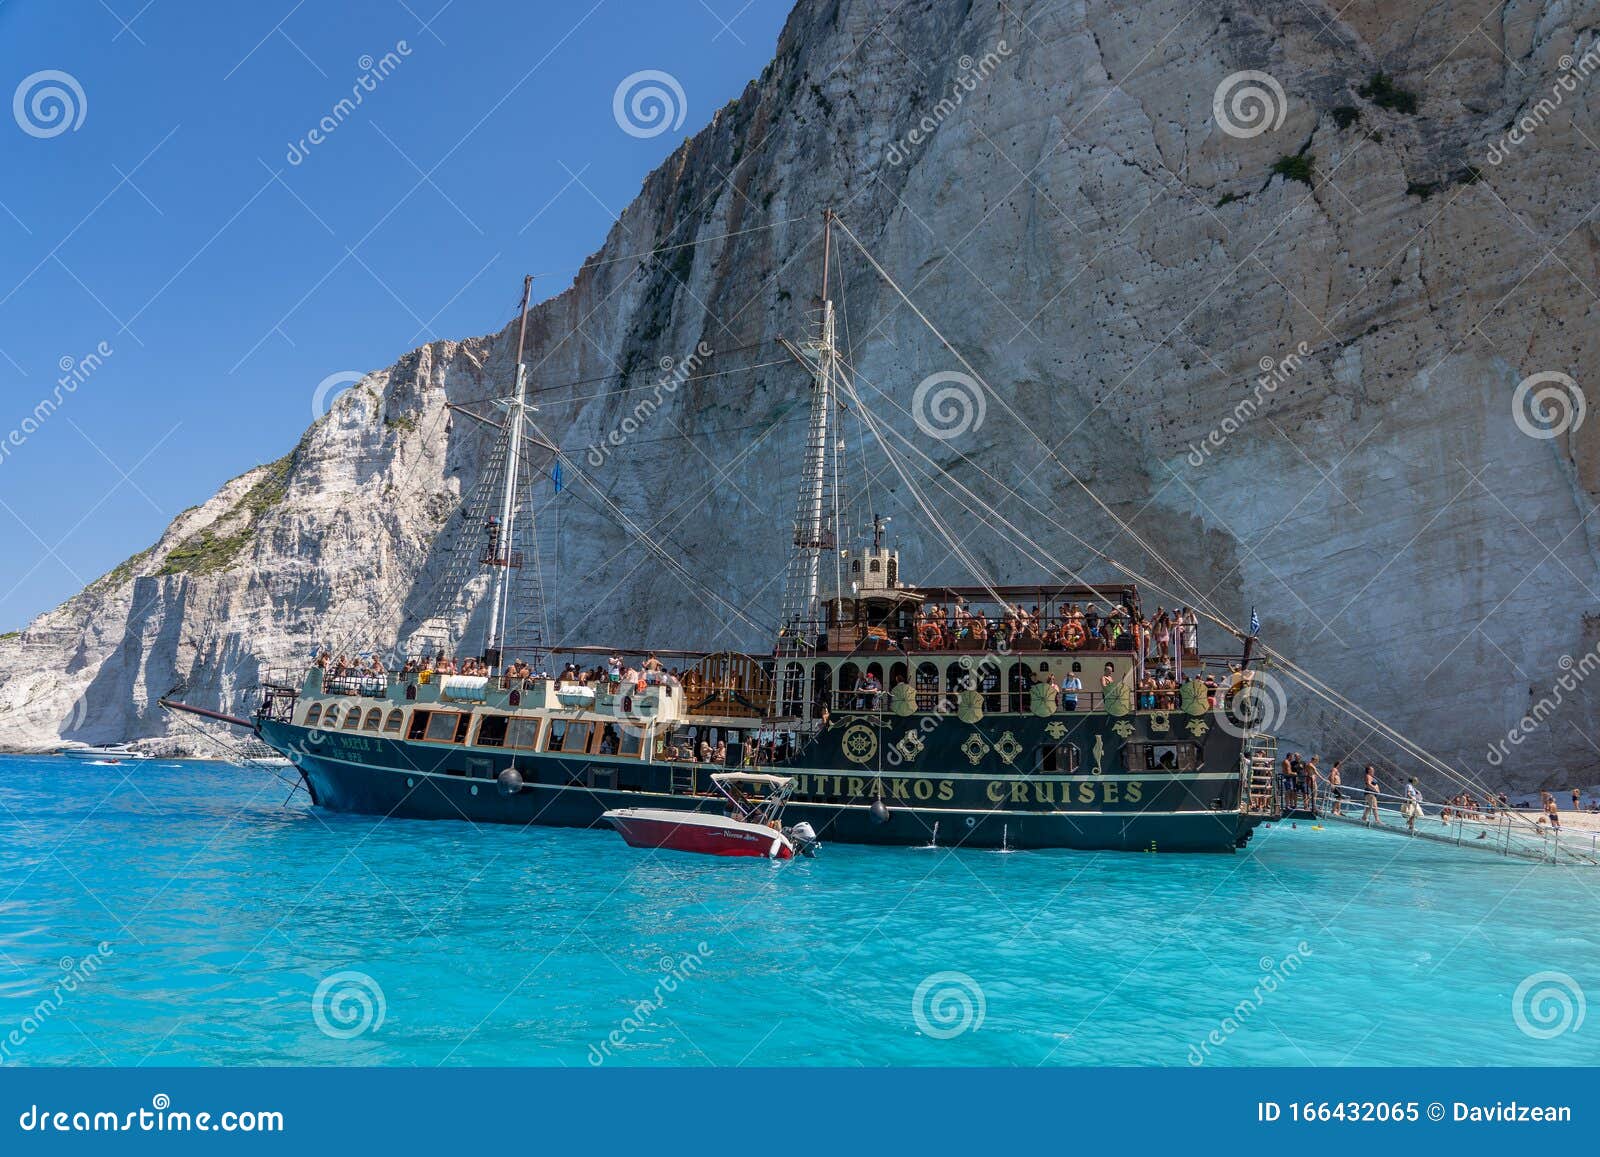 Zakynthos, Greece - August 20, 2019: Pirate Ship Style Cruise Ship Full ...